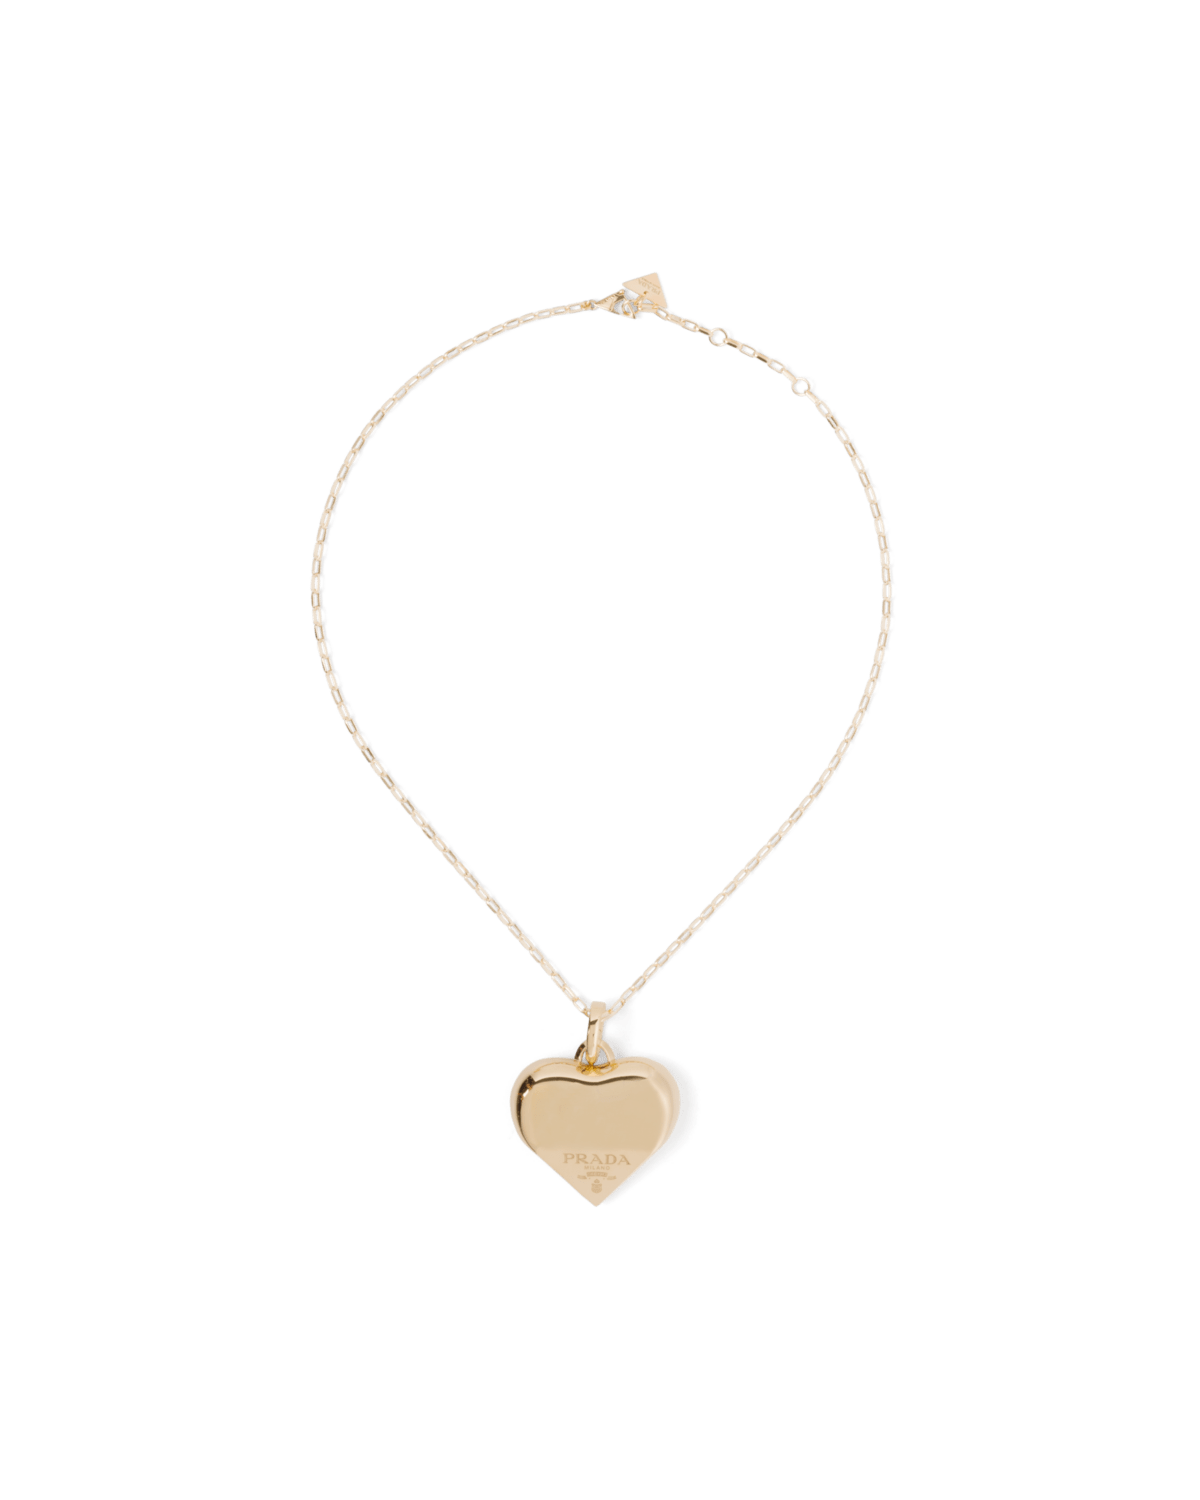 PradaFine Jewelry EternalGold heart necklace 1JCA06 2DA5 F0056 SLF UC2321759